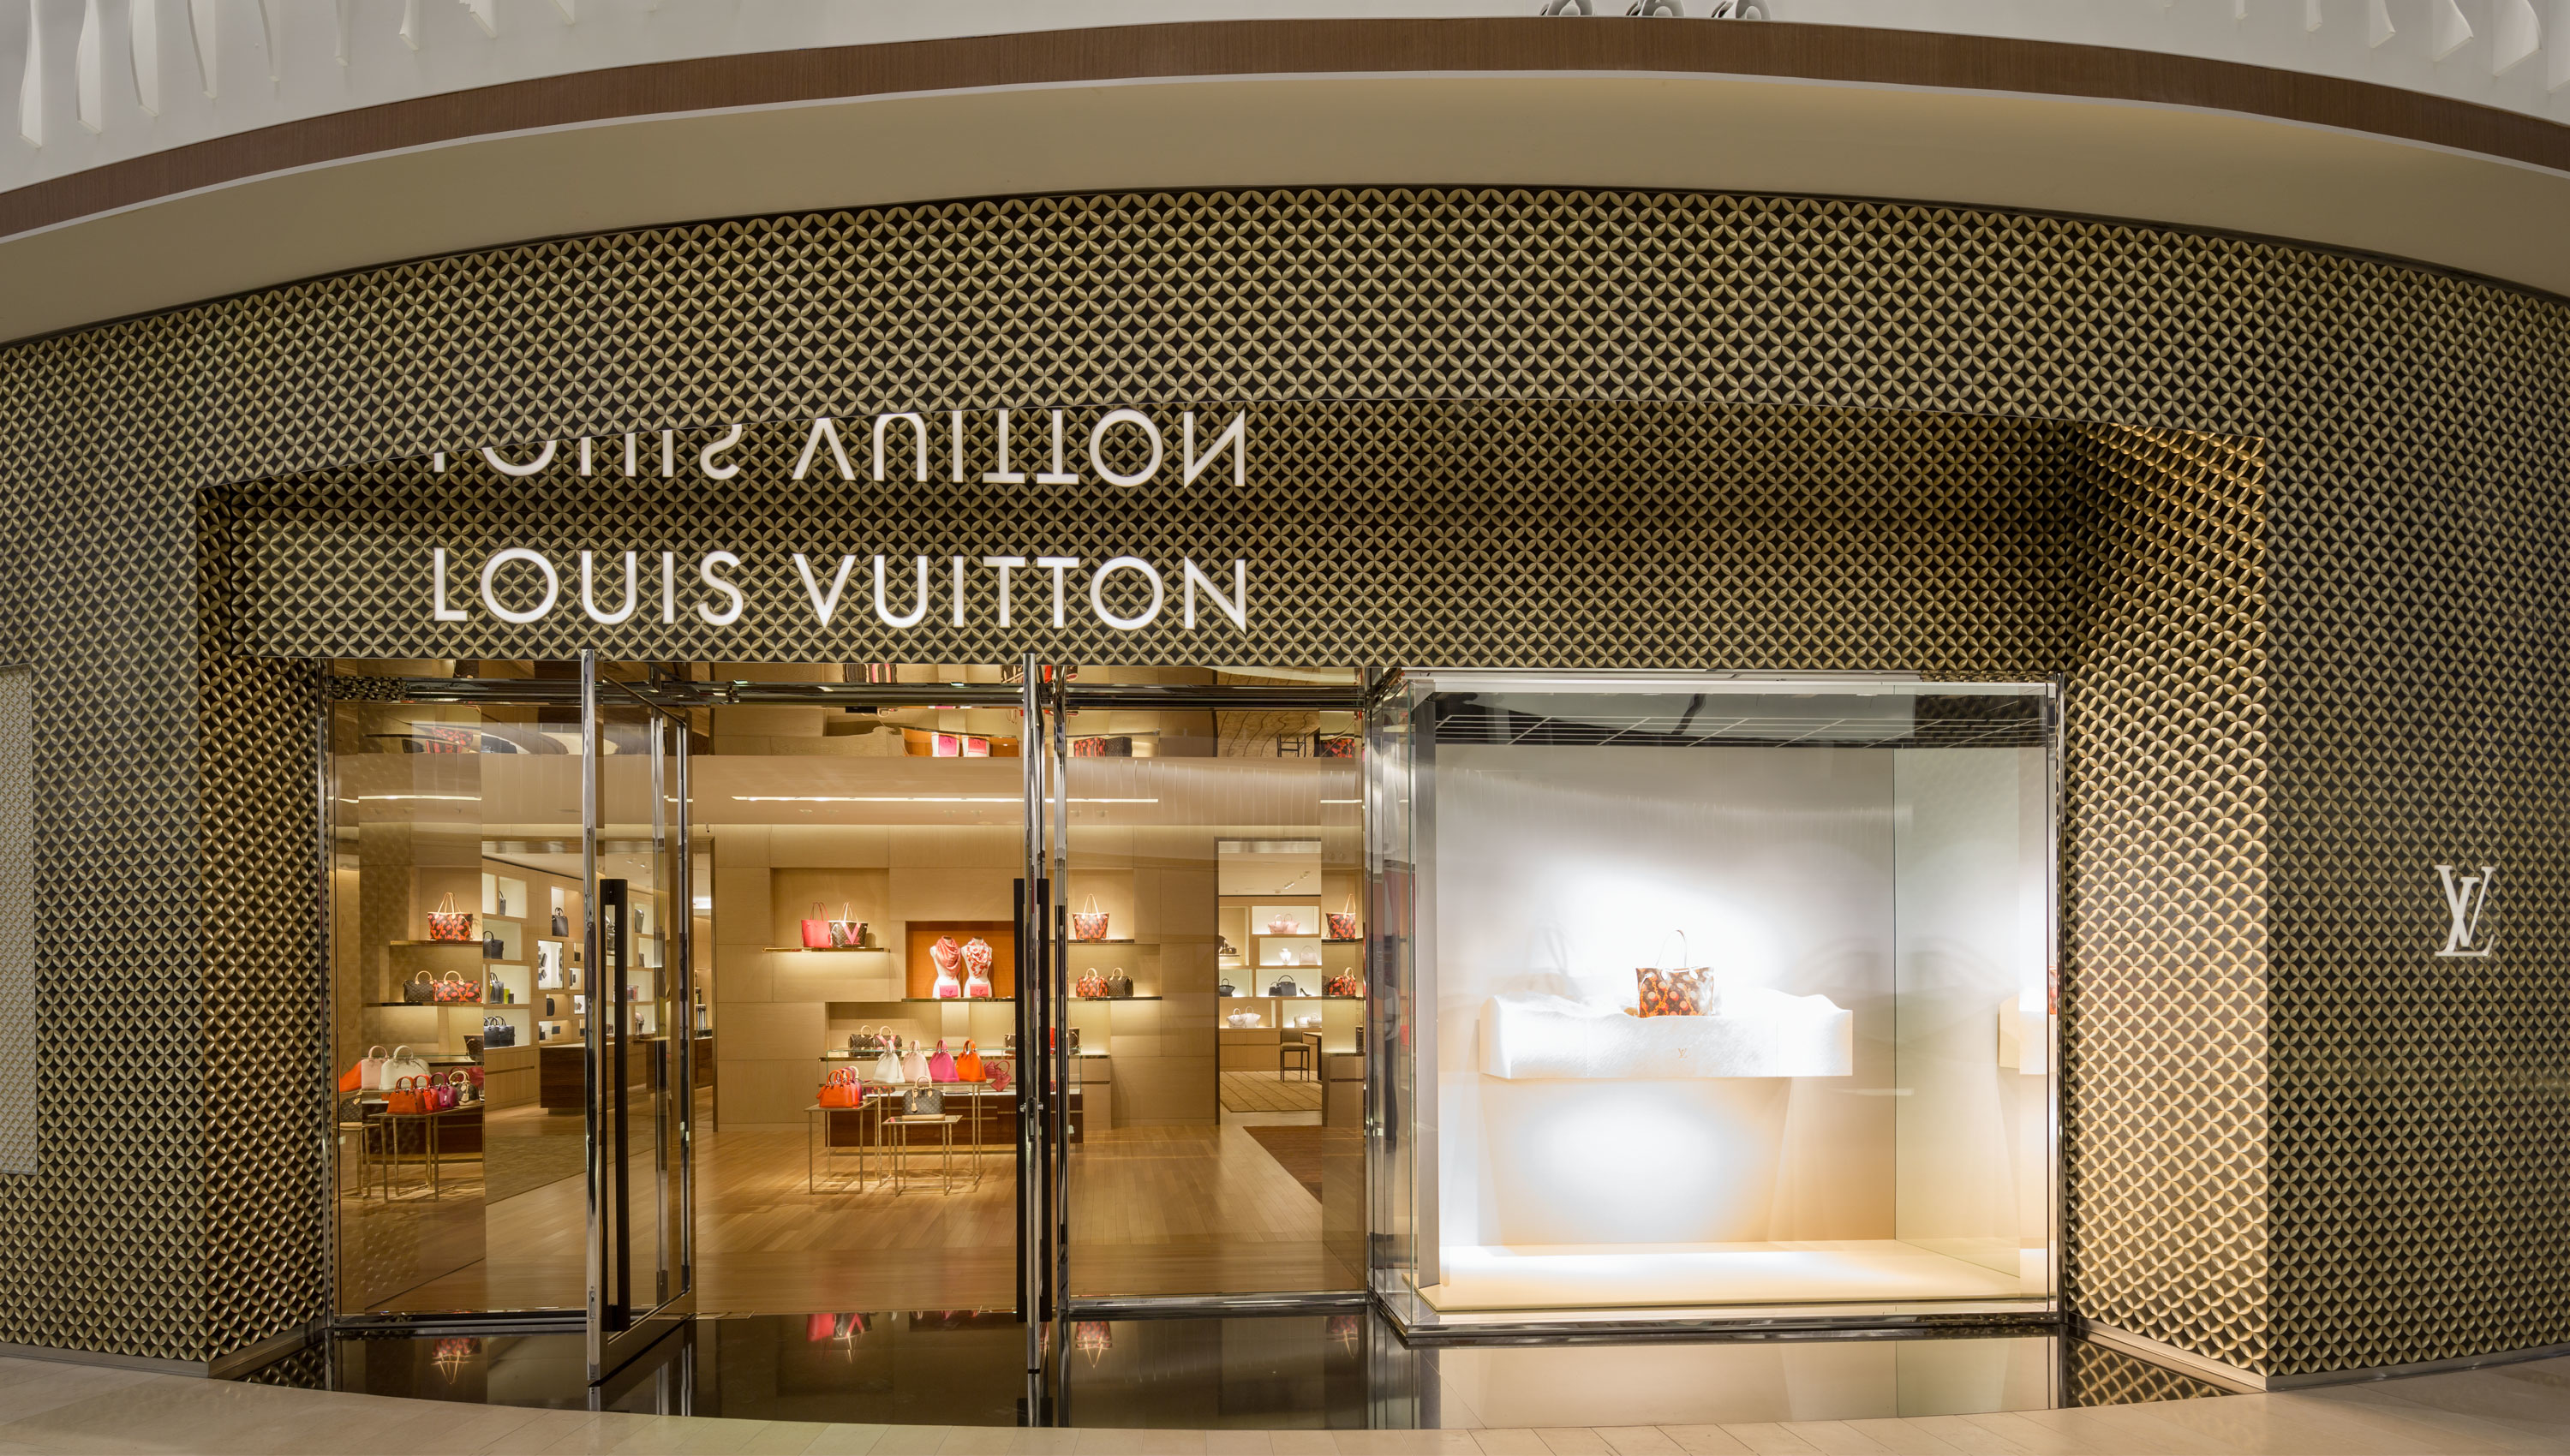 Louis Vuitton Boston Copley store, United States